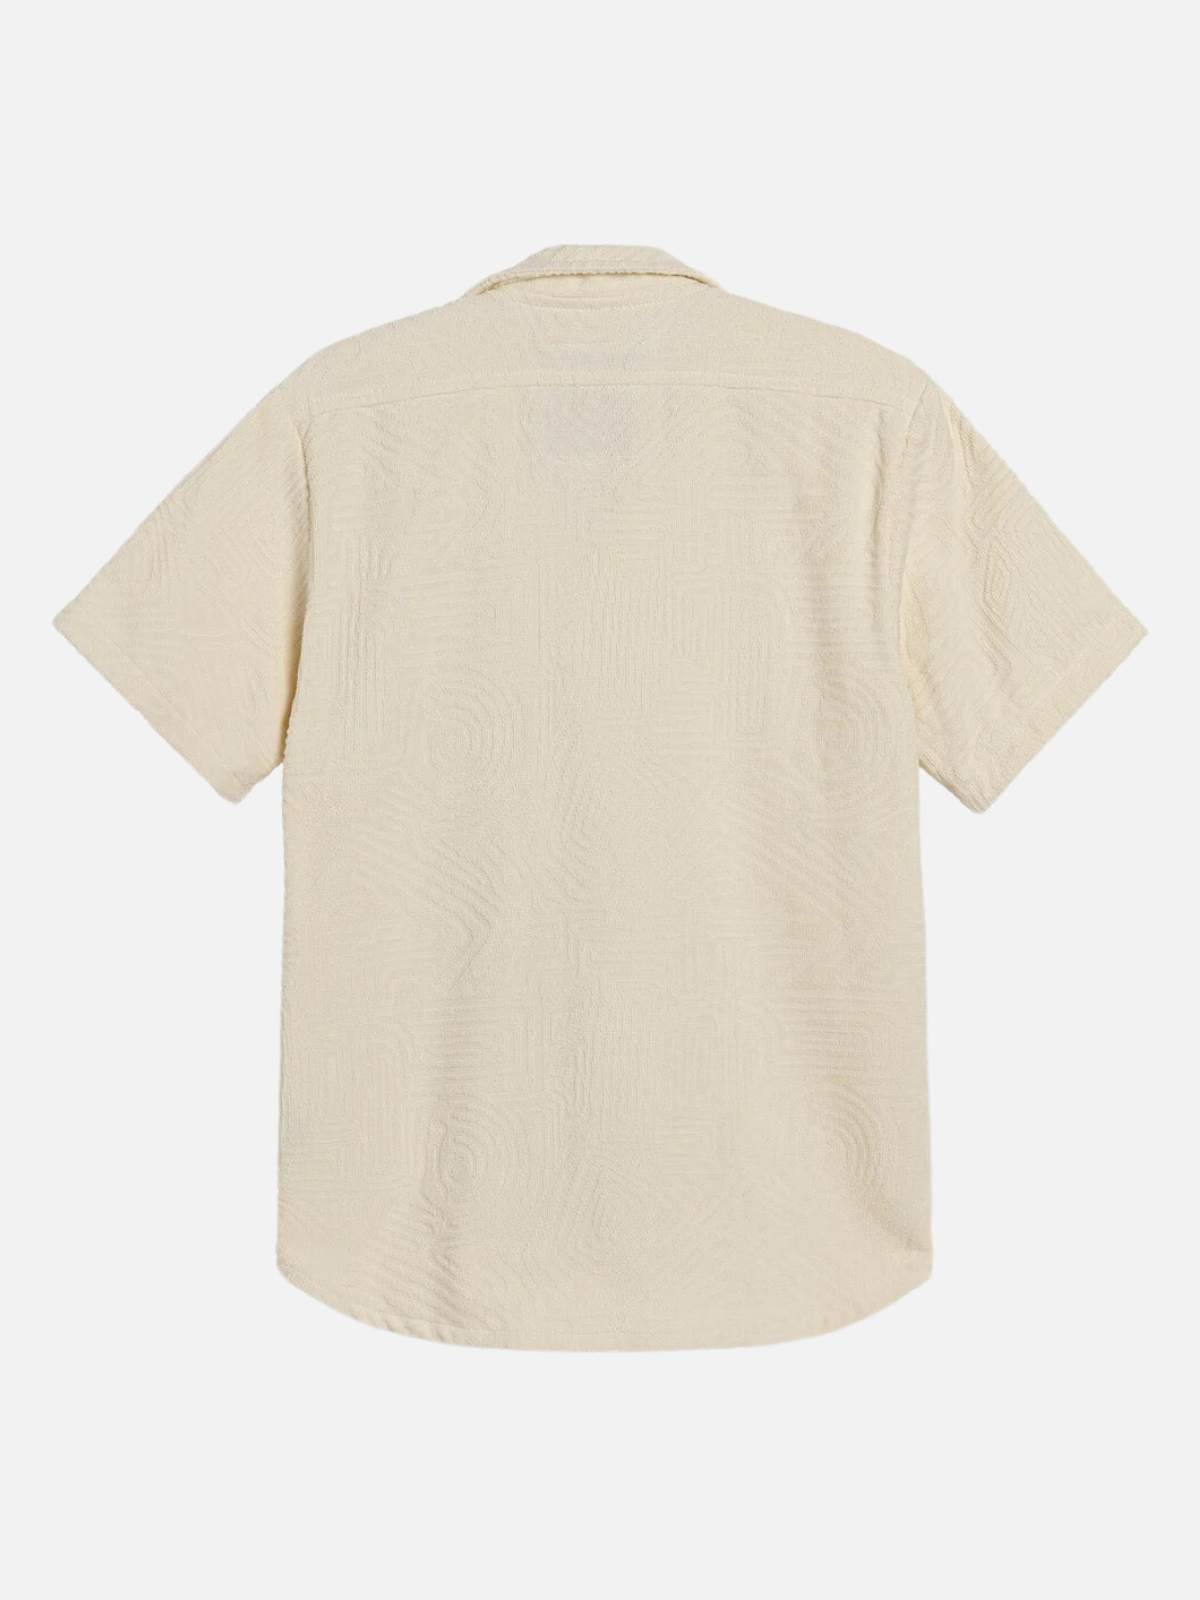 oas golconda cuba terry shirt 100% cotton terry towel material cream ss short sleeve button down kempt athens ga georgia men's clothing store